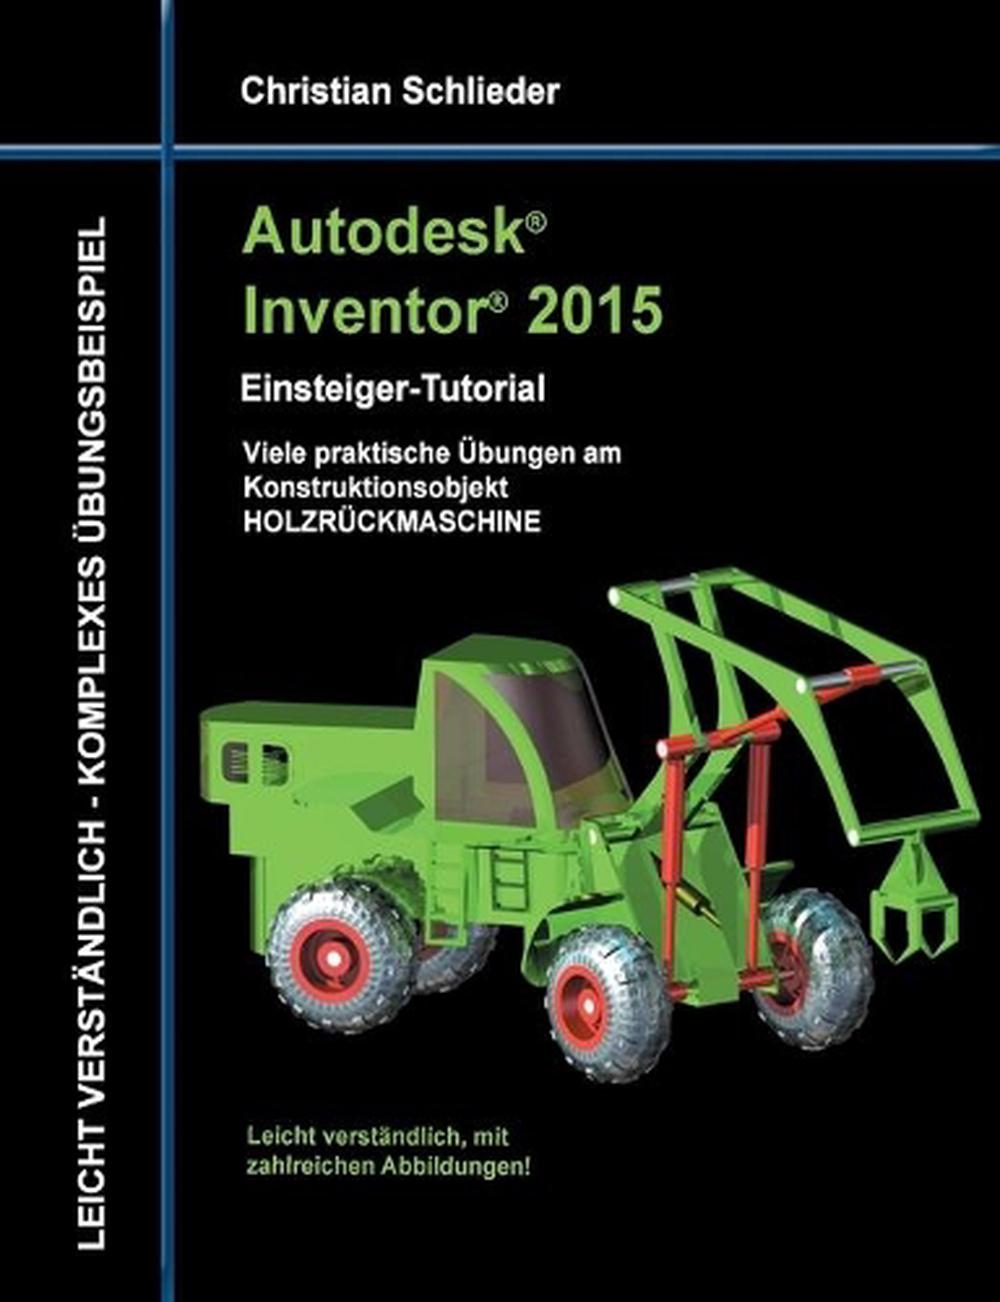 autodesk inventor 2015 features